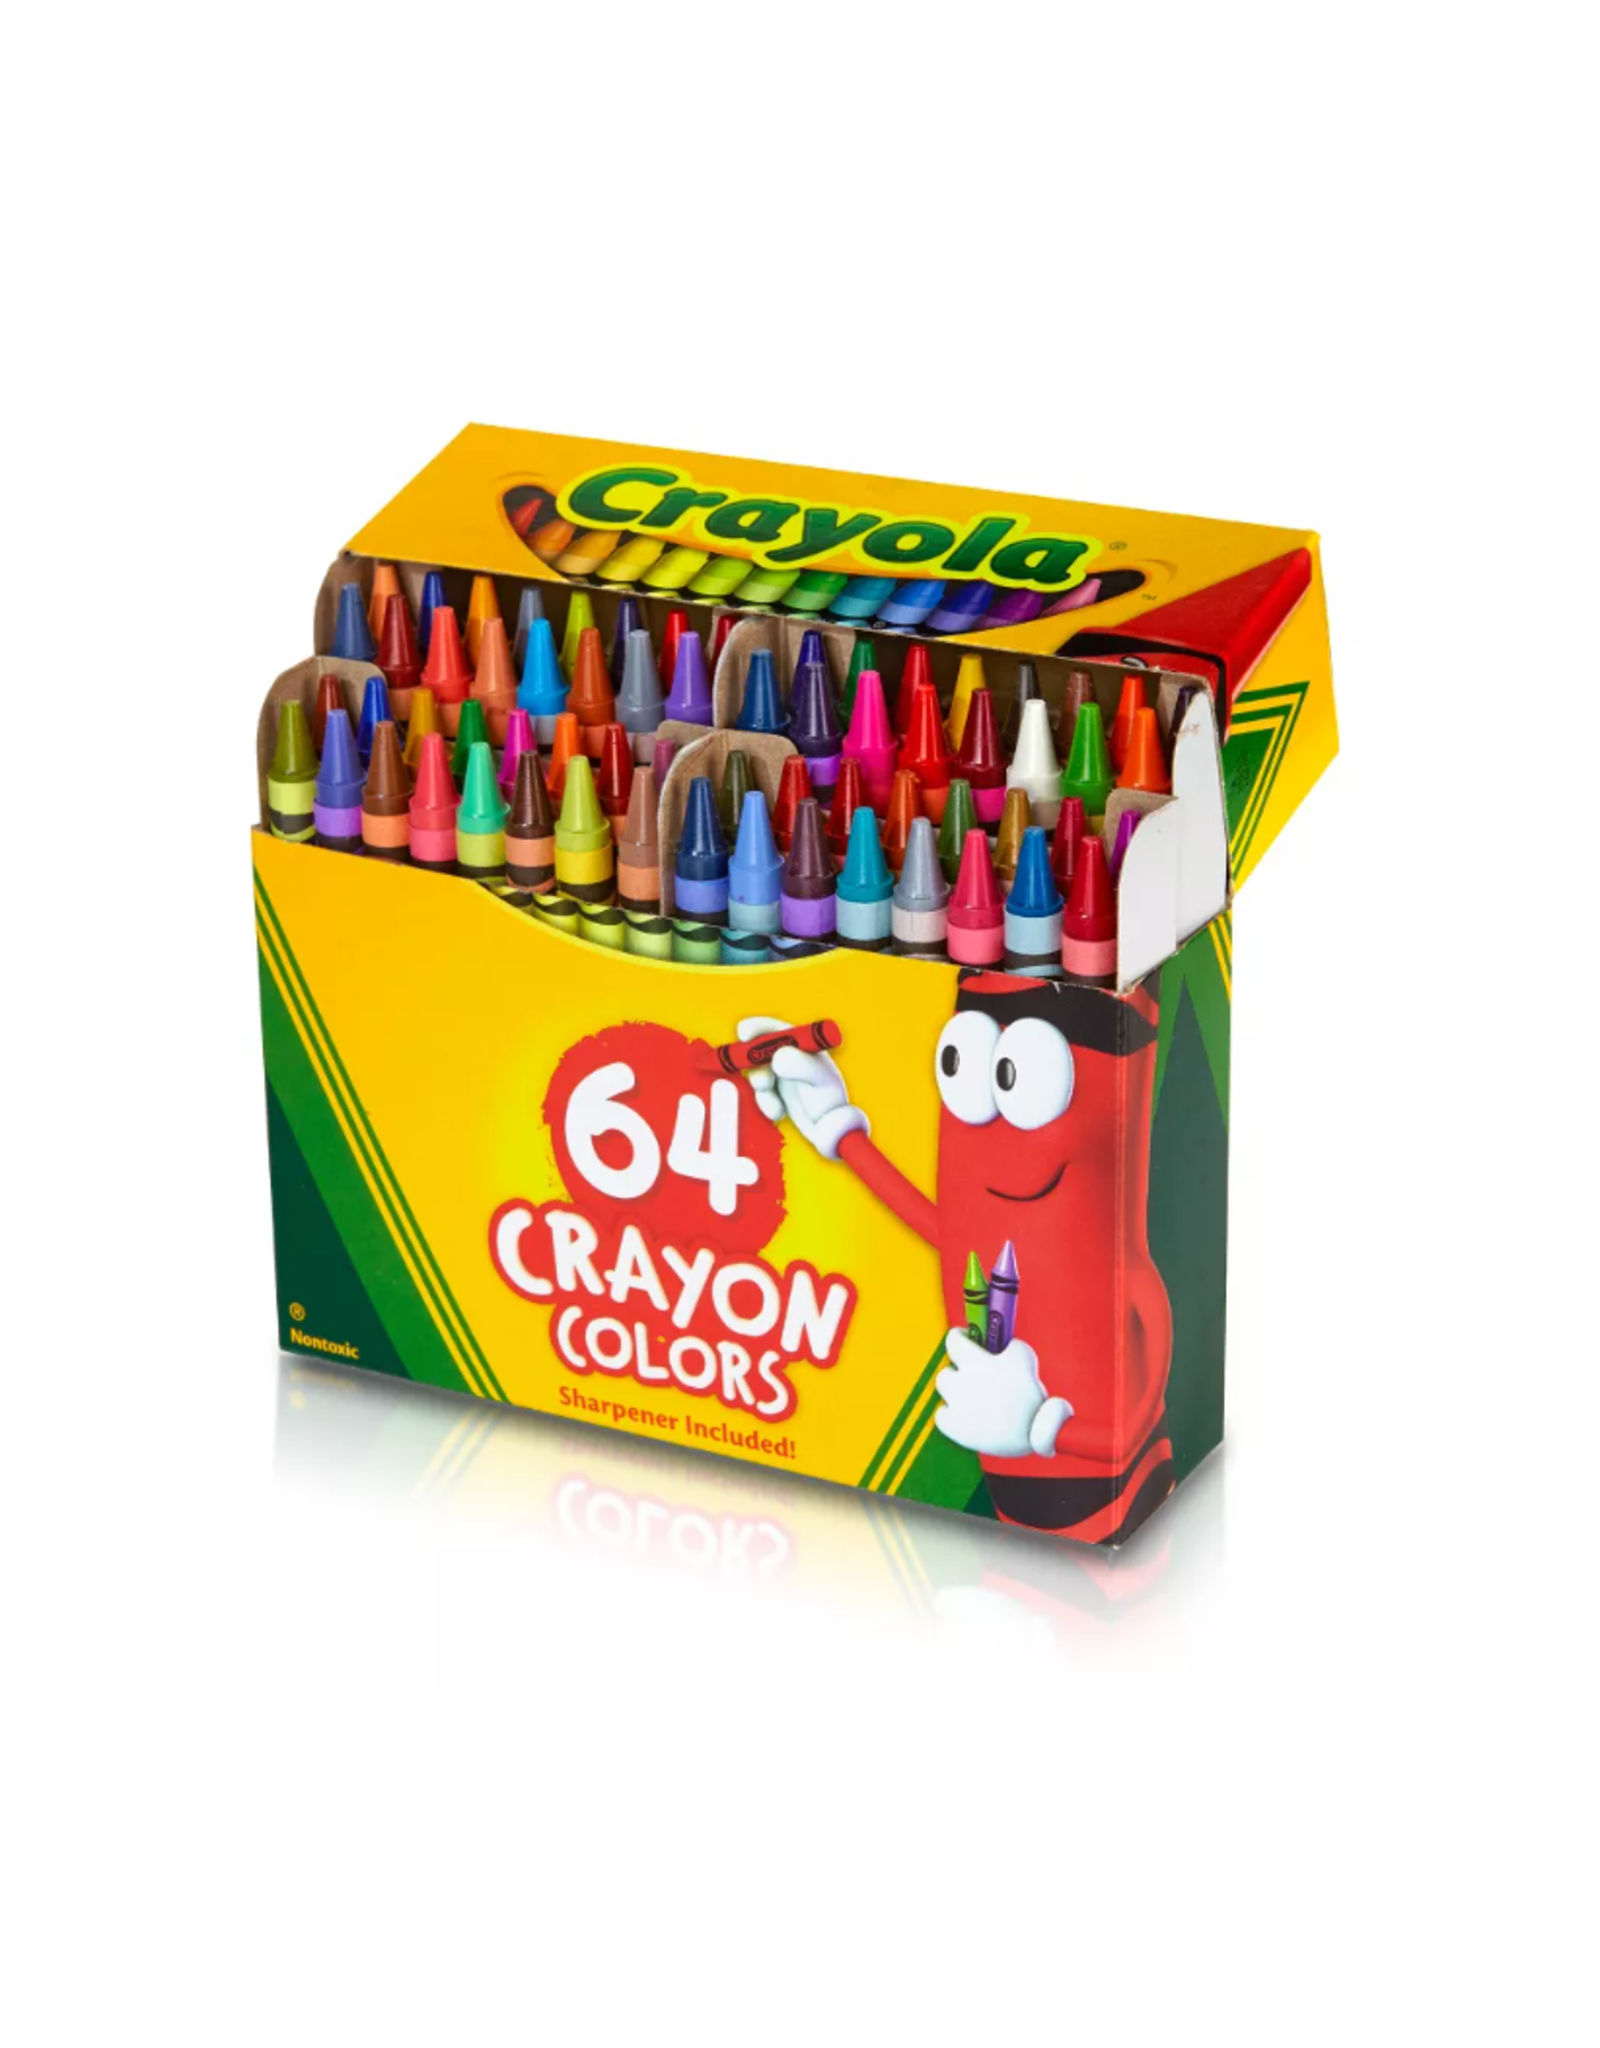 Crayola CRAYOLA CRAYONS WITH SHARPENER 64 PACK